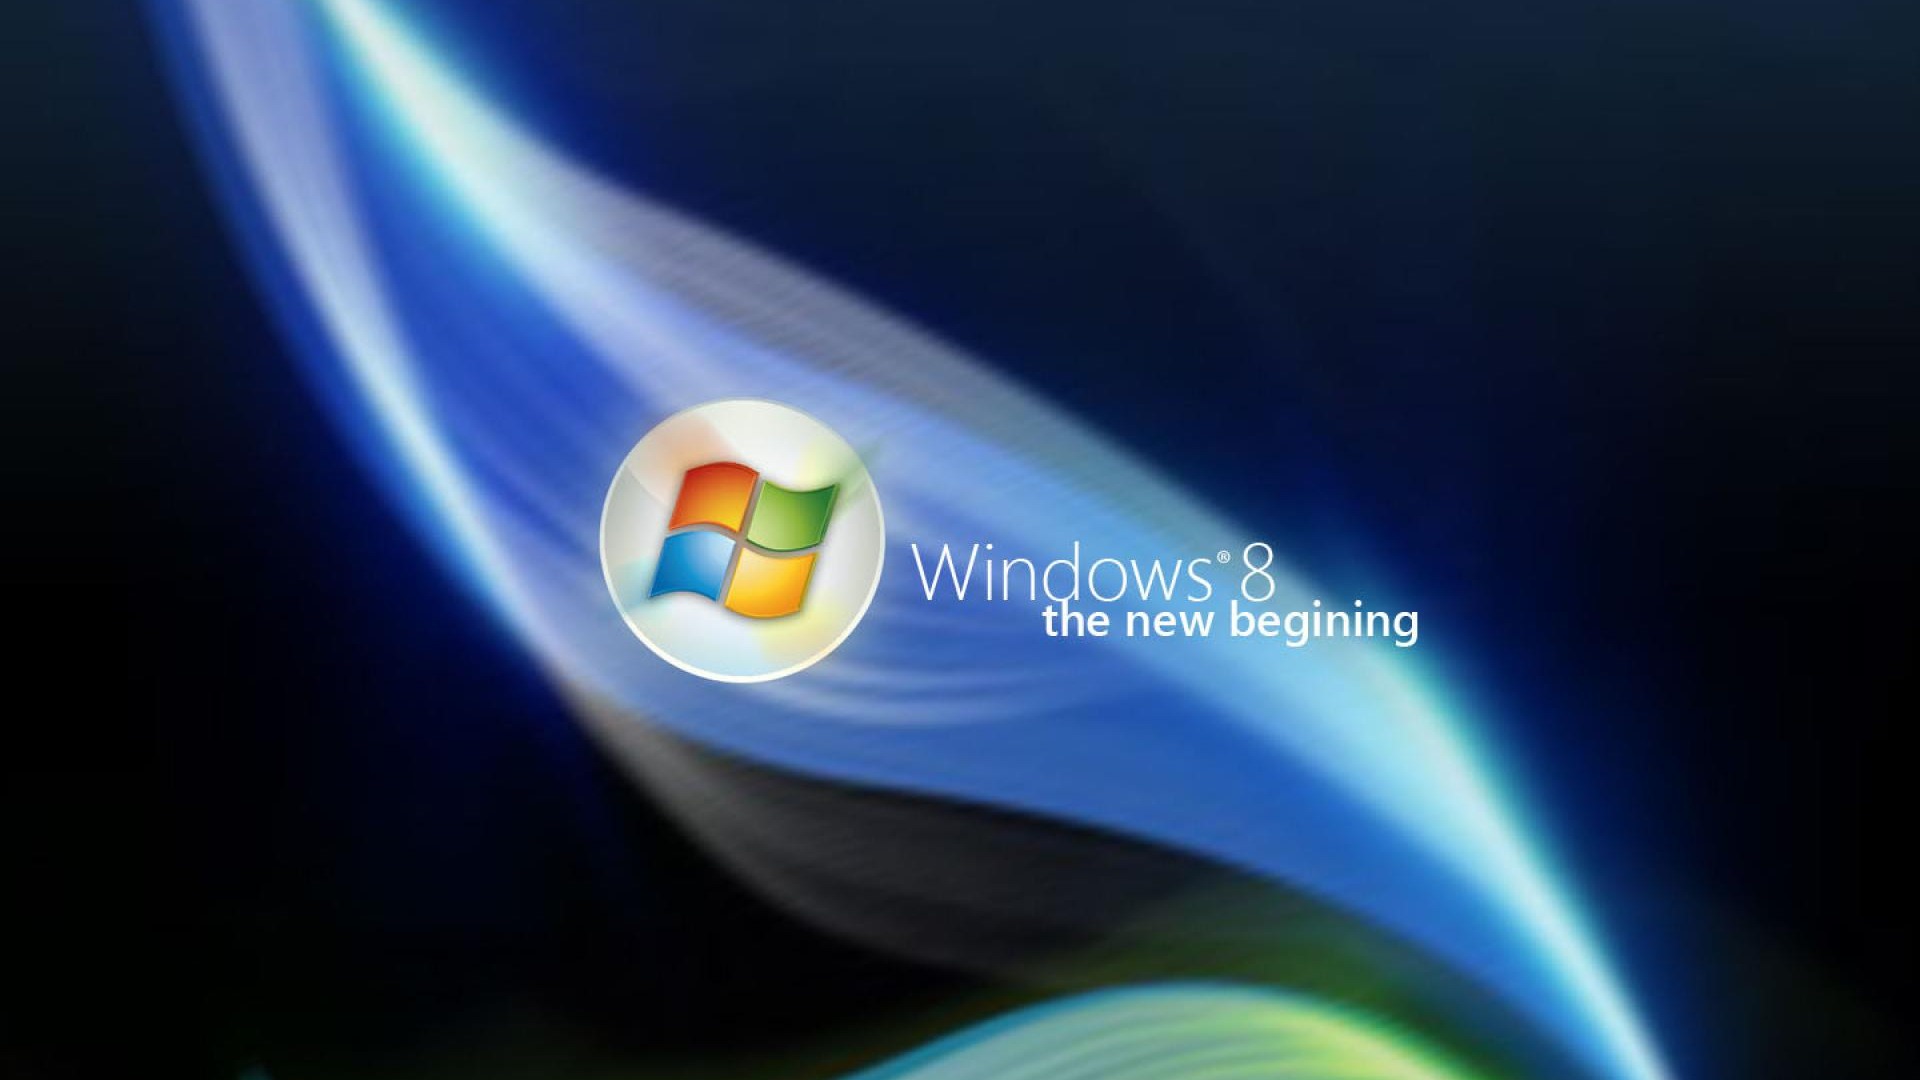 Windows 8 主题壁纸 (二)10 - 1920x1080